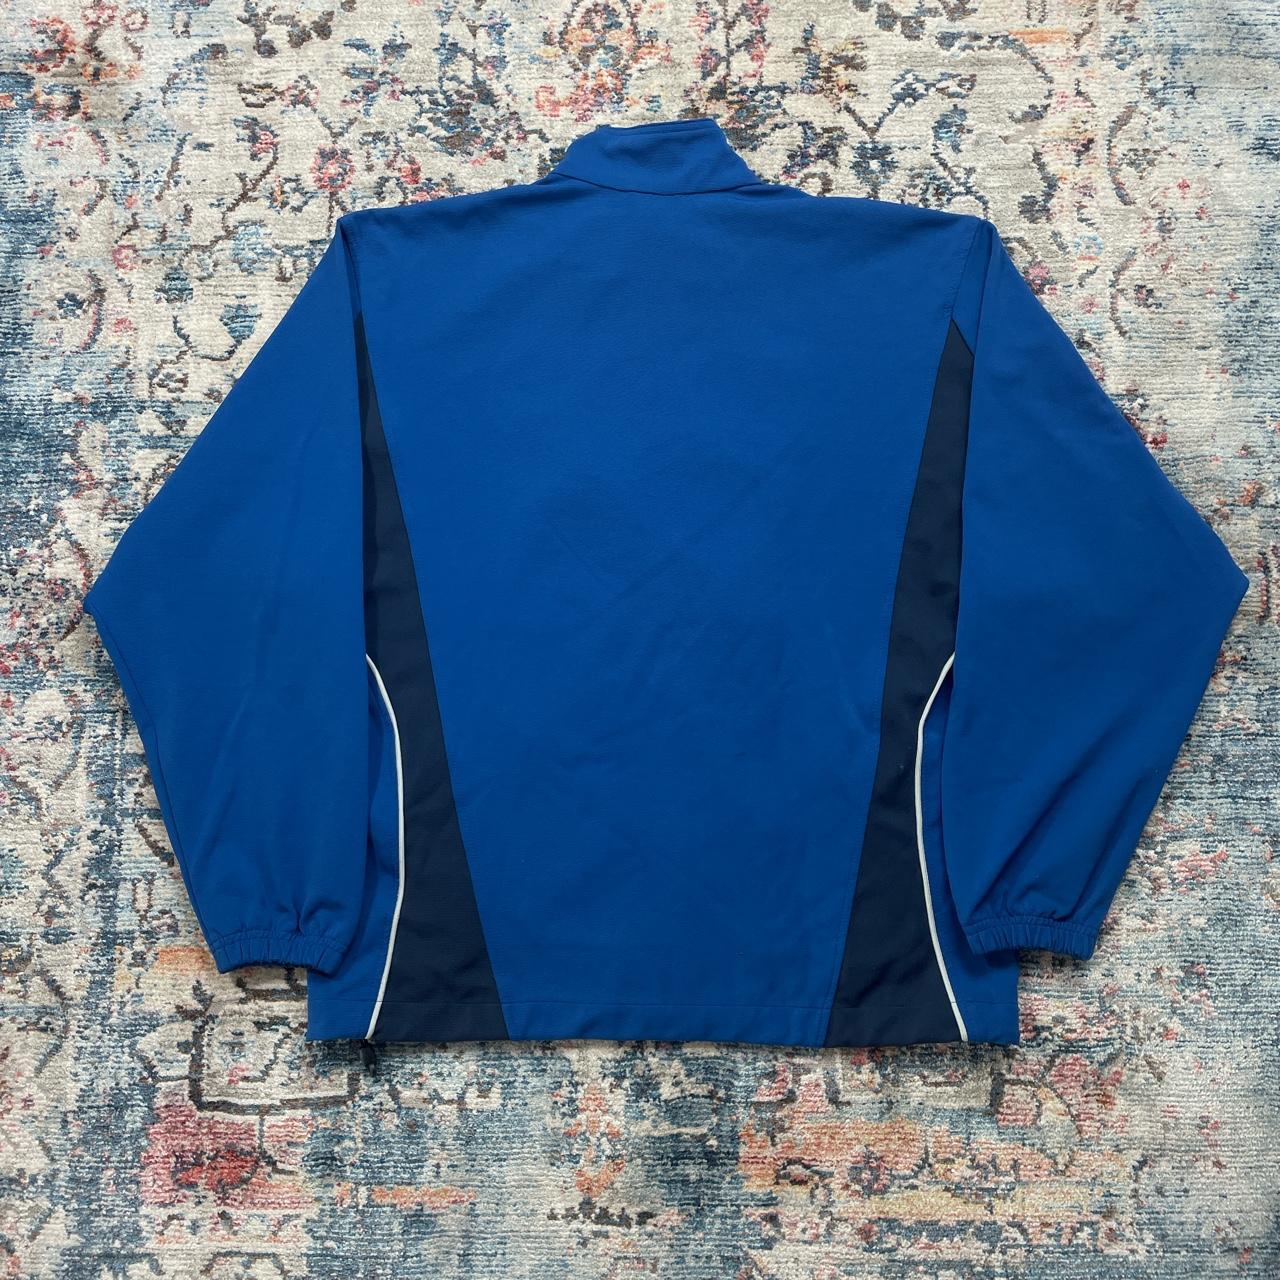 Vintage Nike Blue Jacket